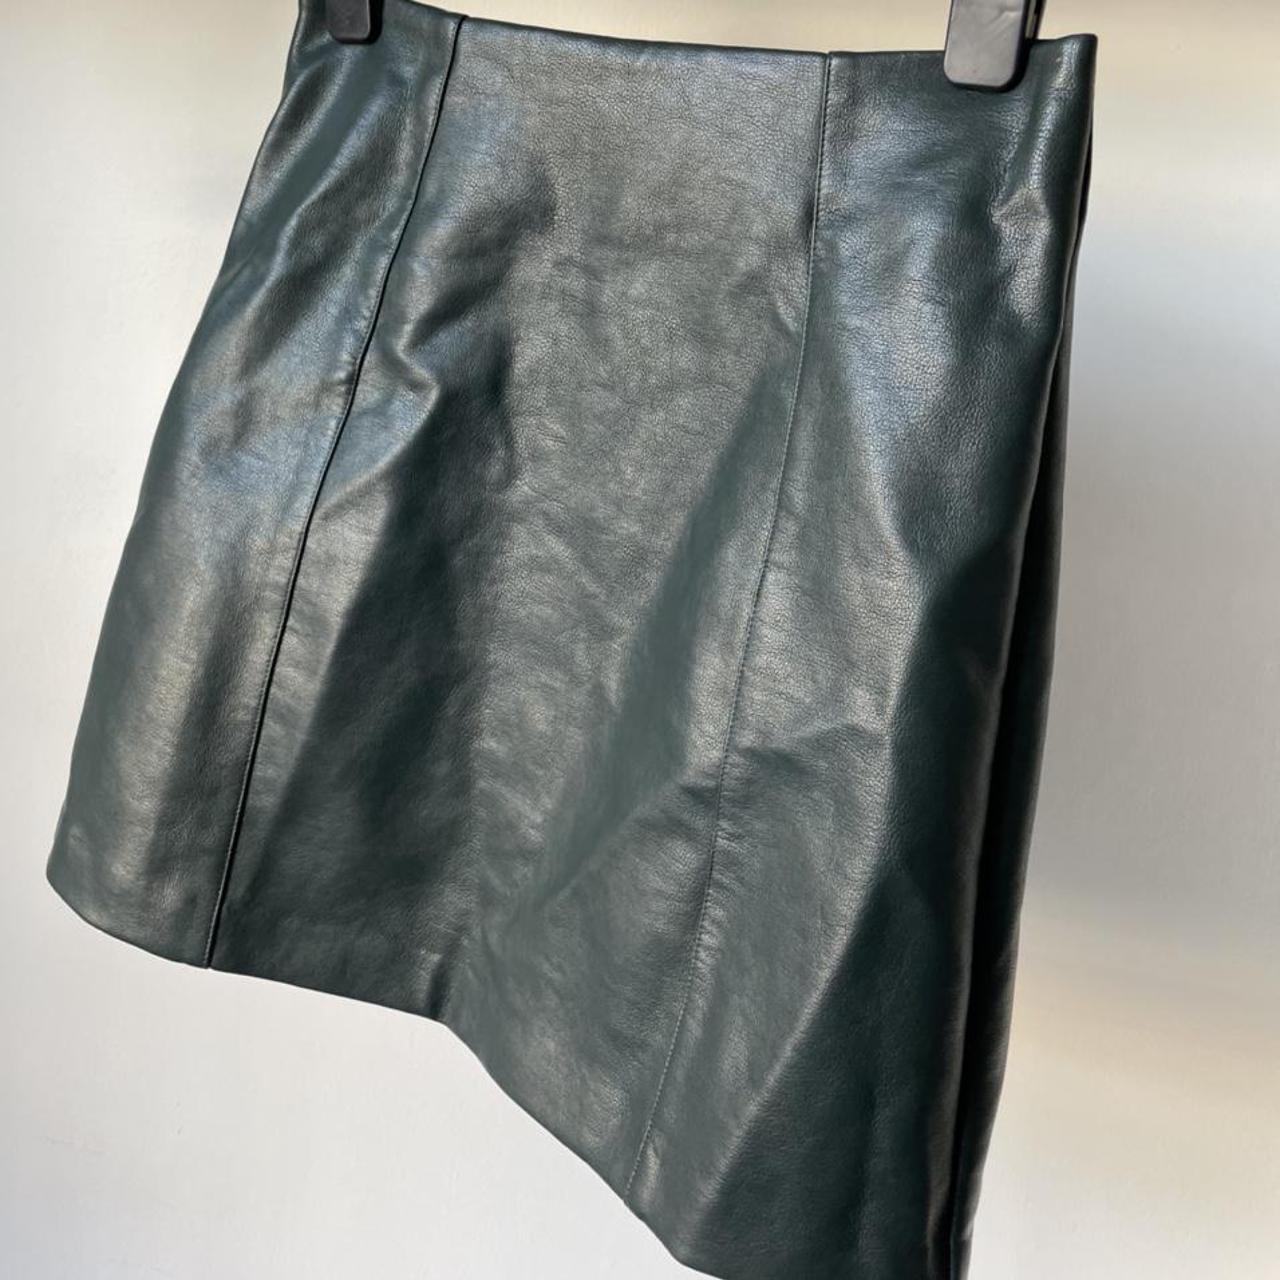 New look leather look dark green skirt size 8... - Depop